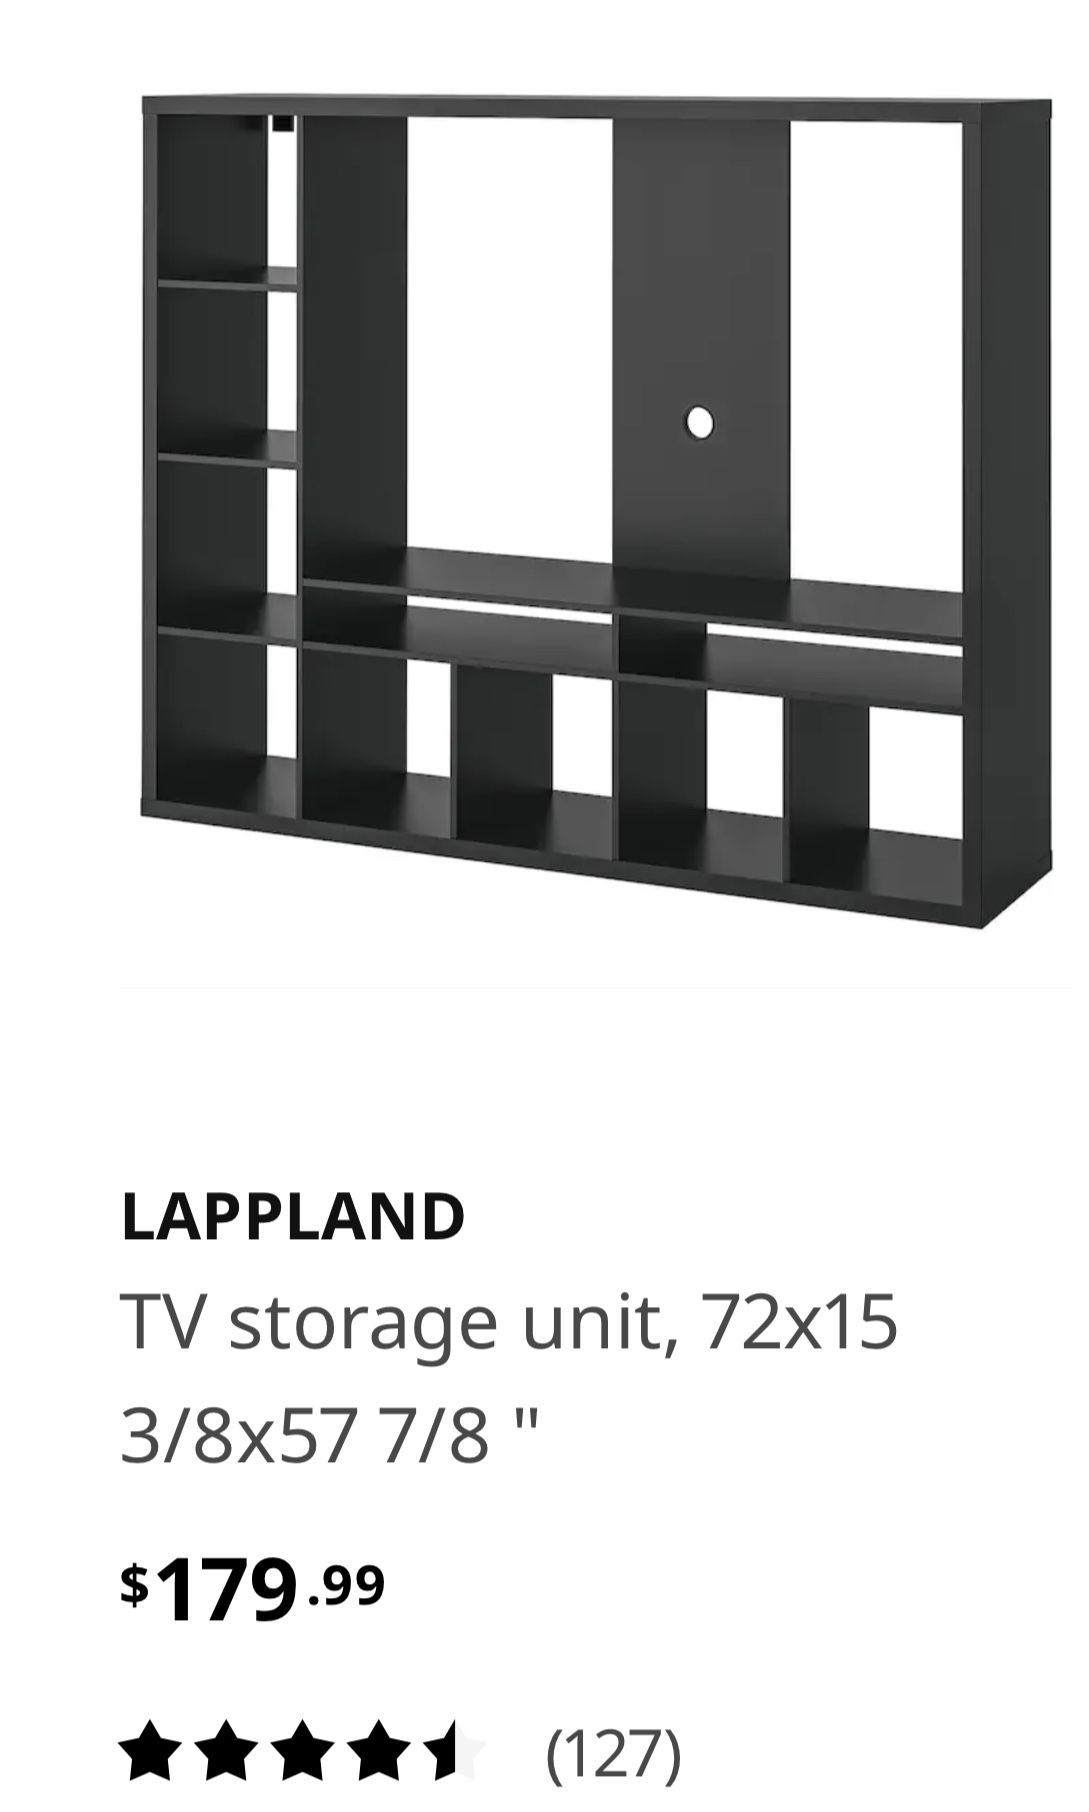 TV storage unit, black-brown